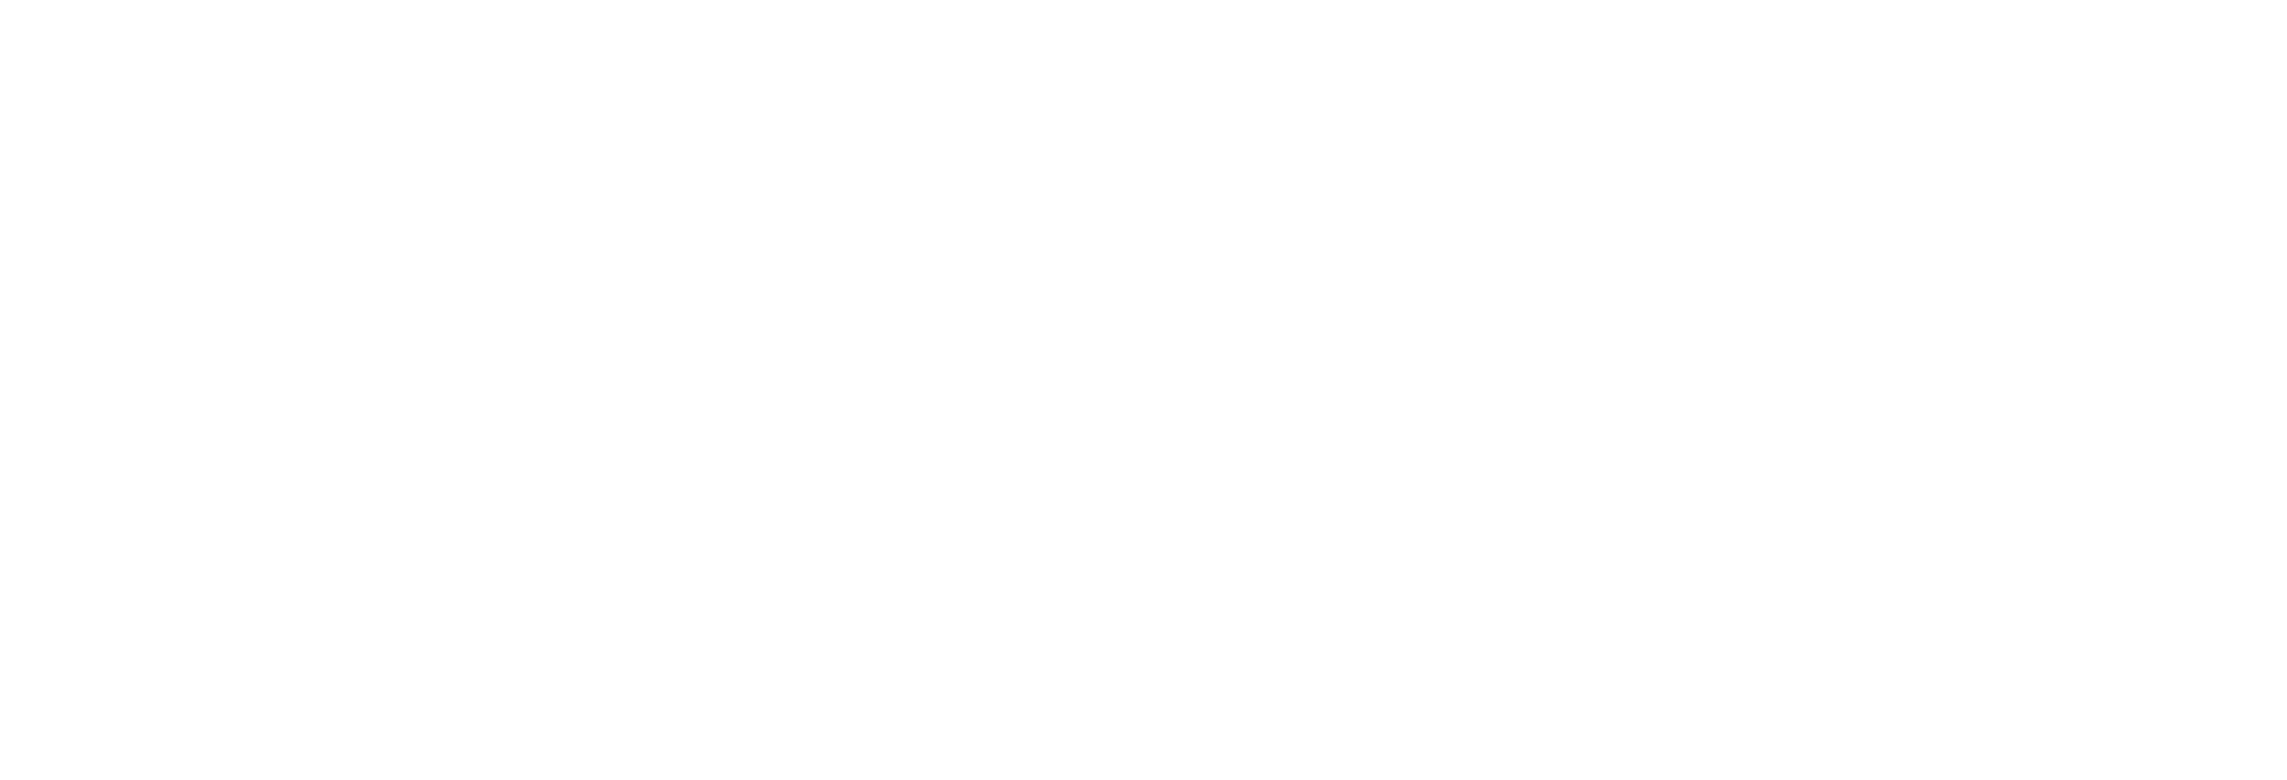 St Oswald's Hospice Logo